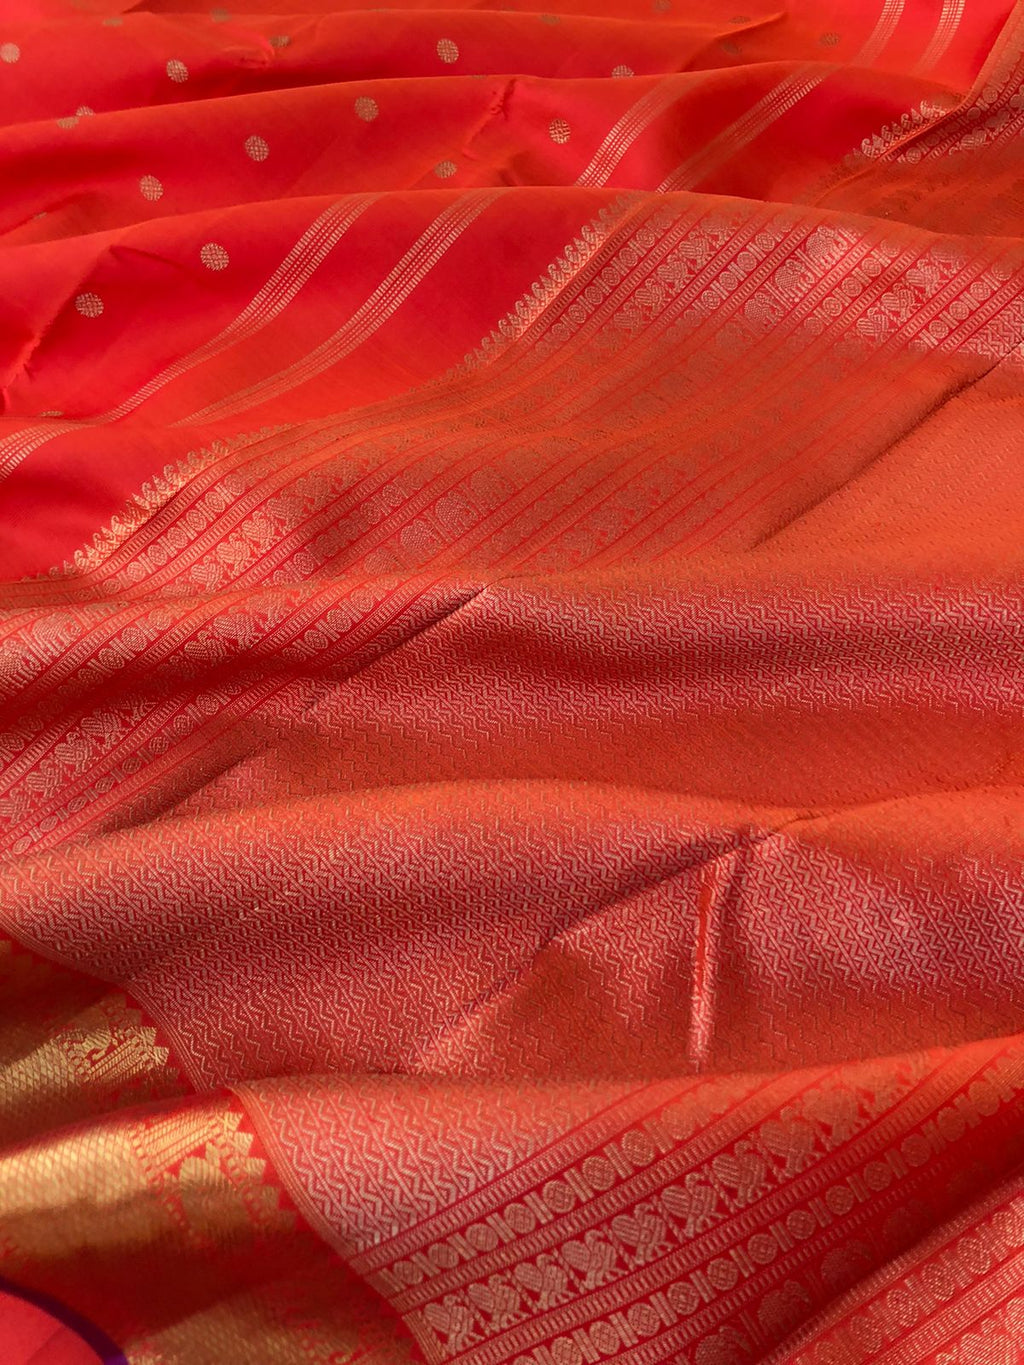 Swarnam - The Solid Kanchivarams - most beautiful traditional Kanchivaram orange and getti pett woven borders